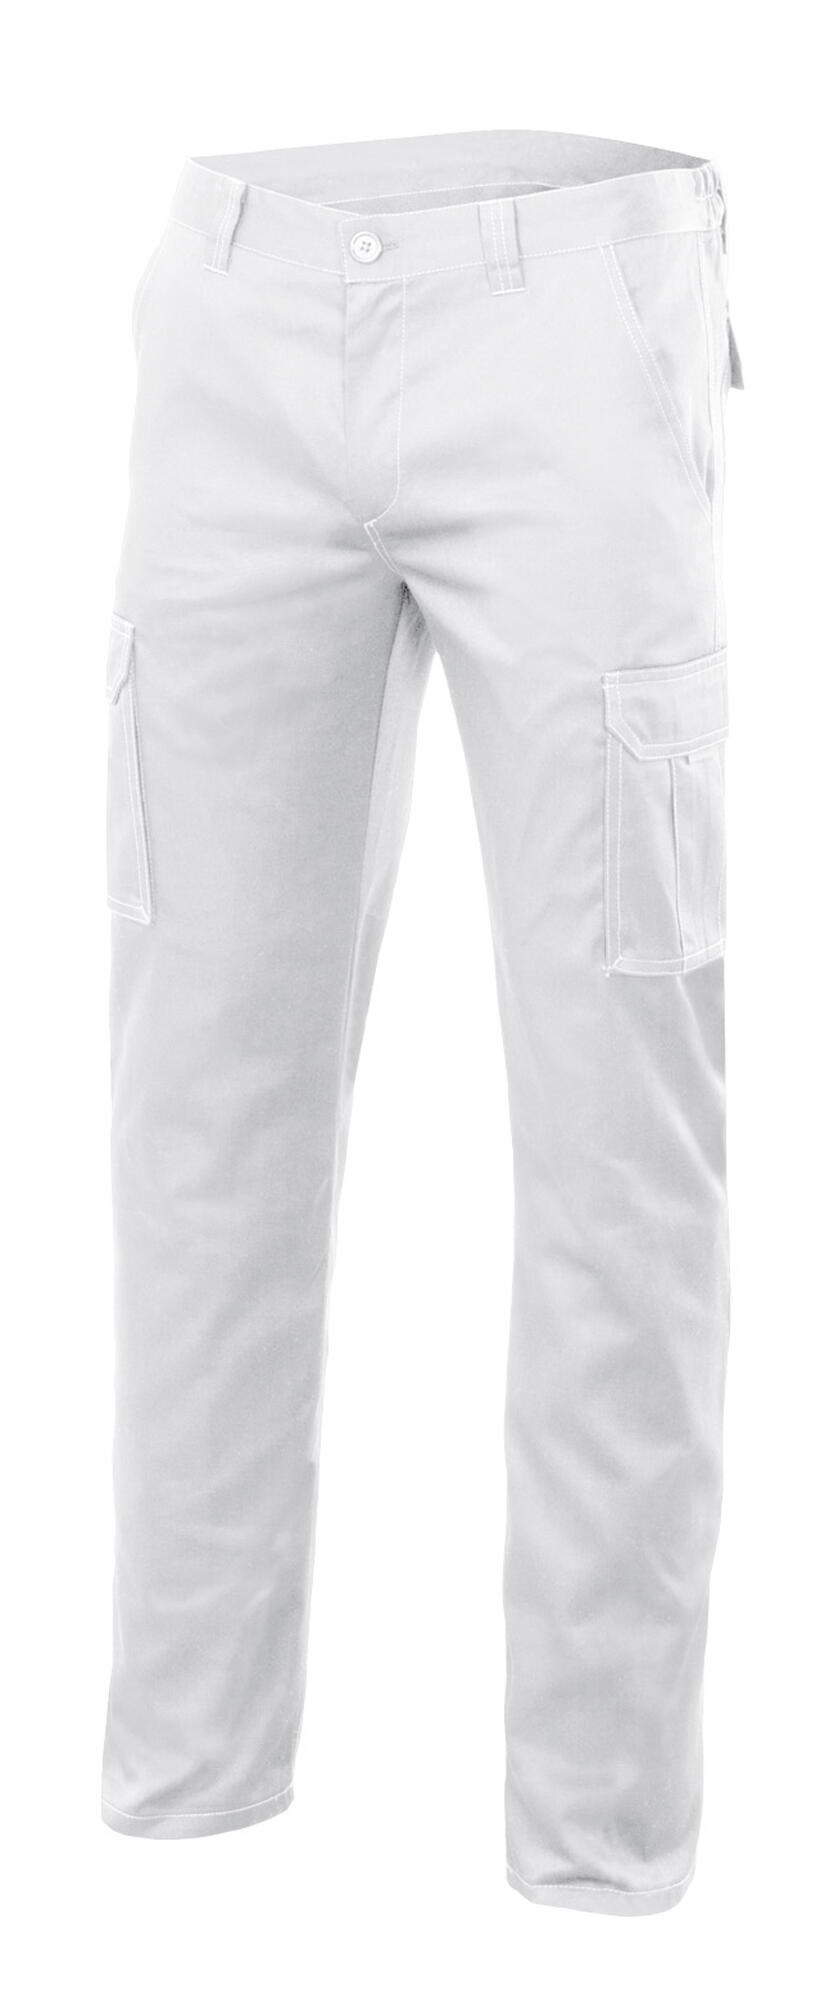 Pantalon de trabajo stretch blanco T42 | Leroy Merlin